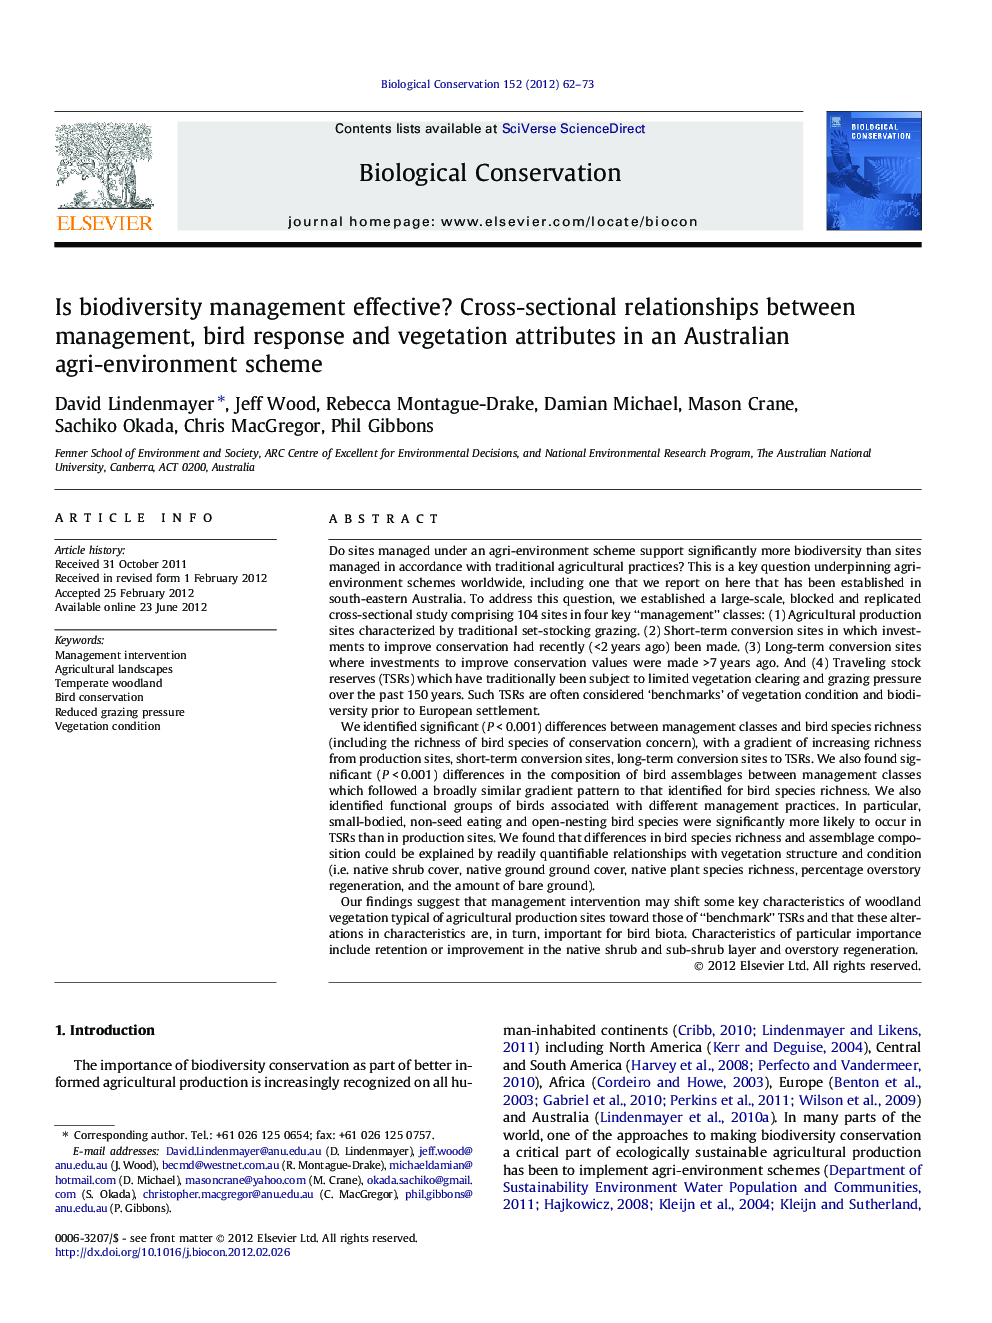 Is biodiversity management effective? Cross-sectional relationships between management, bird response and vegetation attributes in an Australian agri-environment scheme